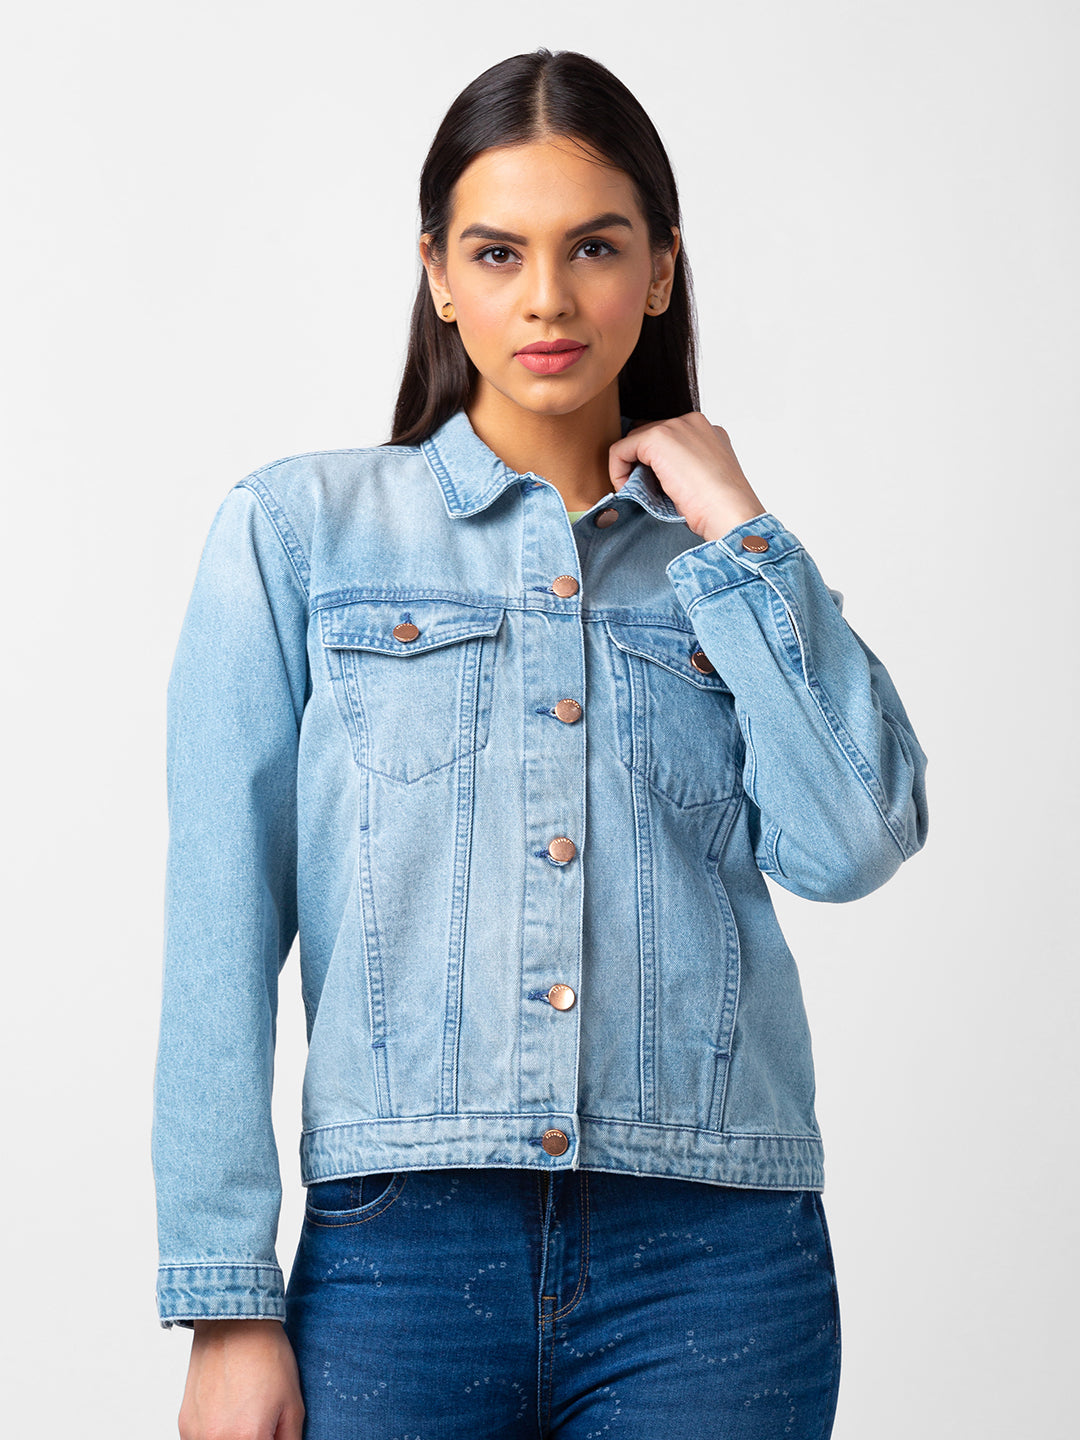 Denim Jacket For Women - Buy Denim Jacket For Women online at Best Prices  in India | Flipkart.com